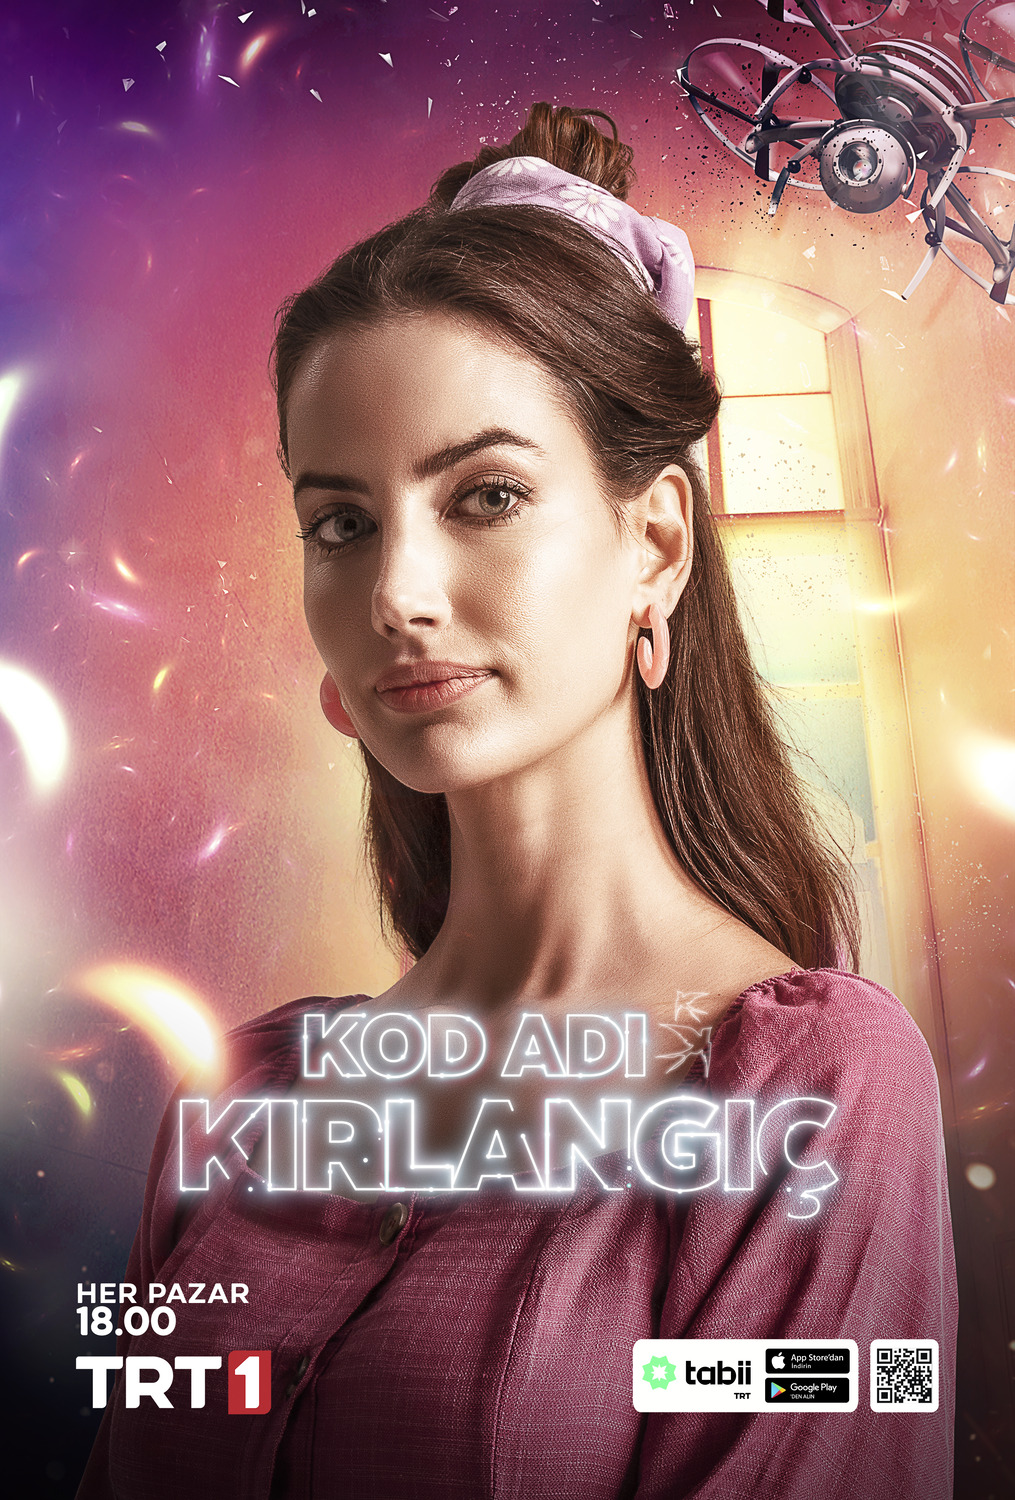 Extra Large TV Poster Image for Kod Adı Kırlangıç (#7 of 12)